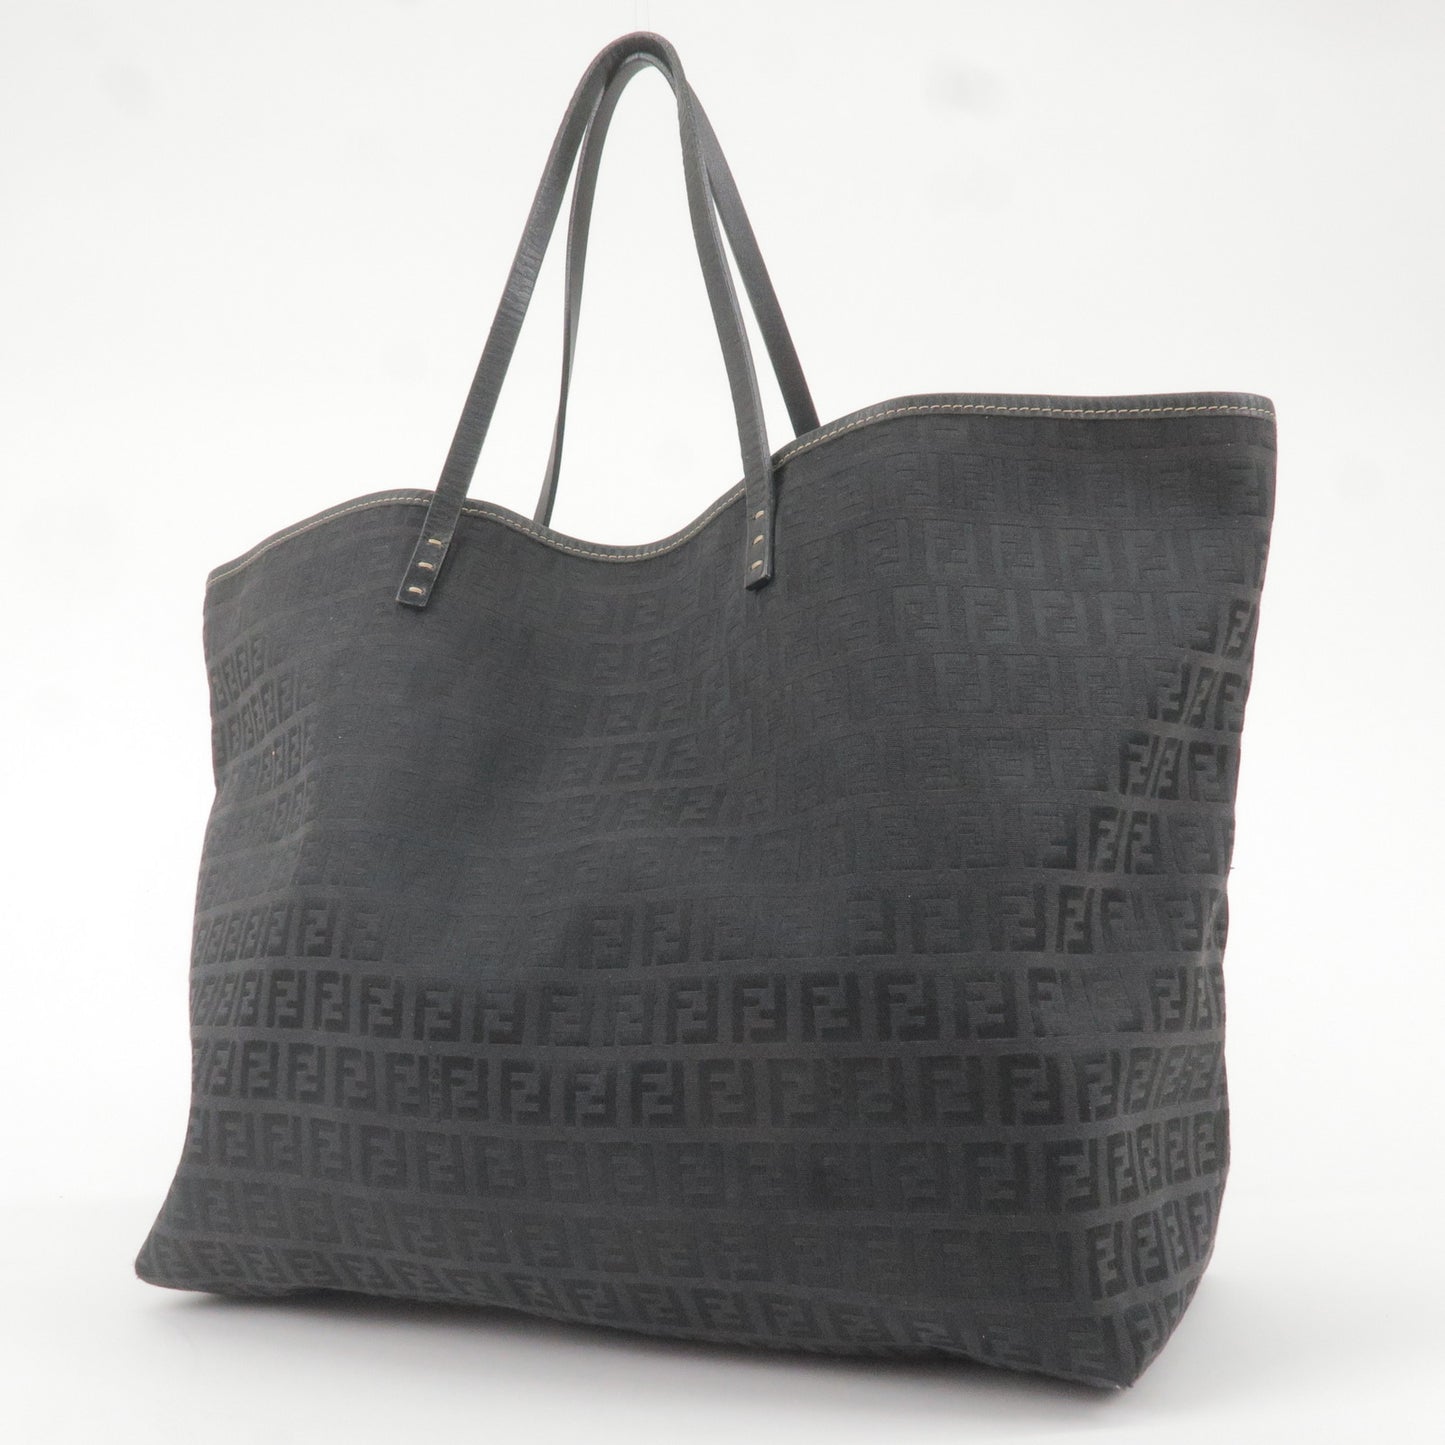 FENDI Zucchino Canvas Leather Tote Bag Hand Bag Black 8BH005